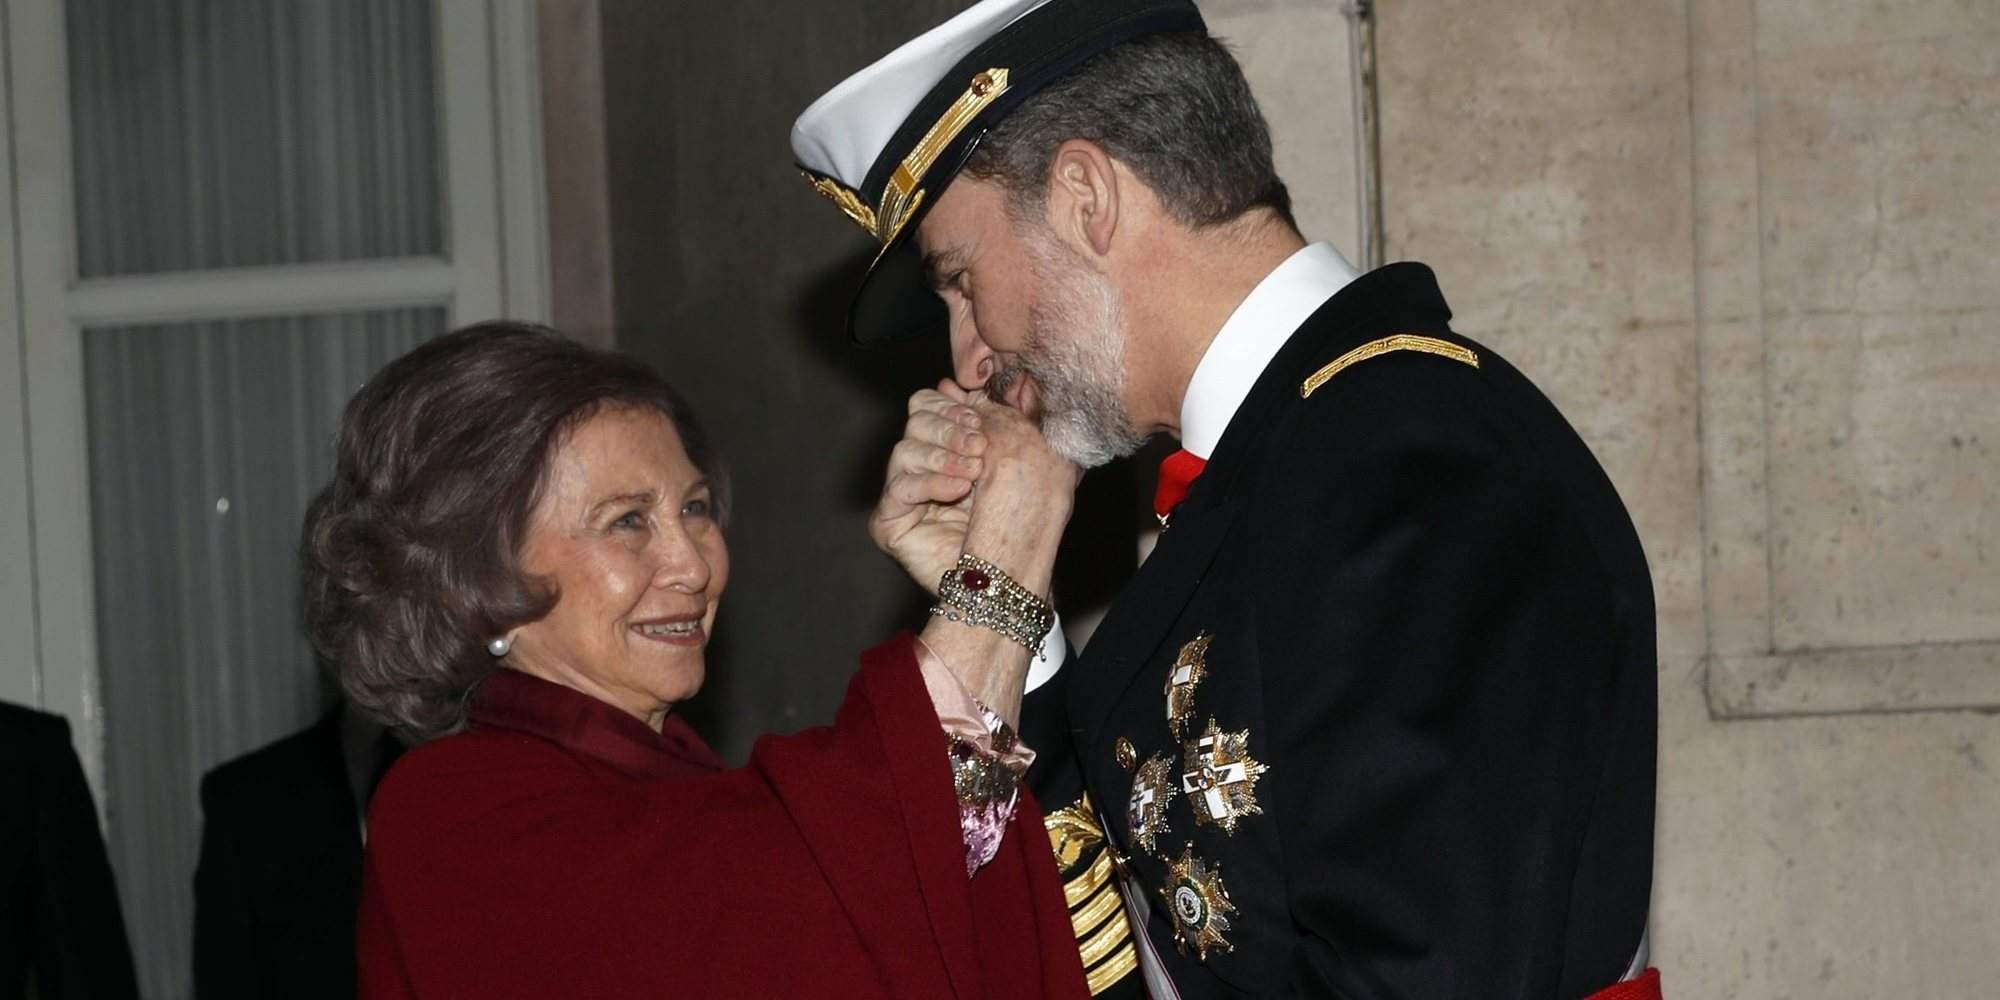 La reina Sofia frena l''Operació Letizia' a Zarzuela